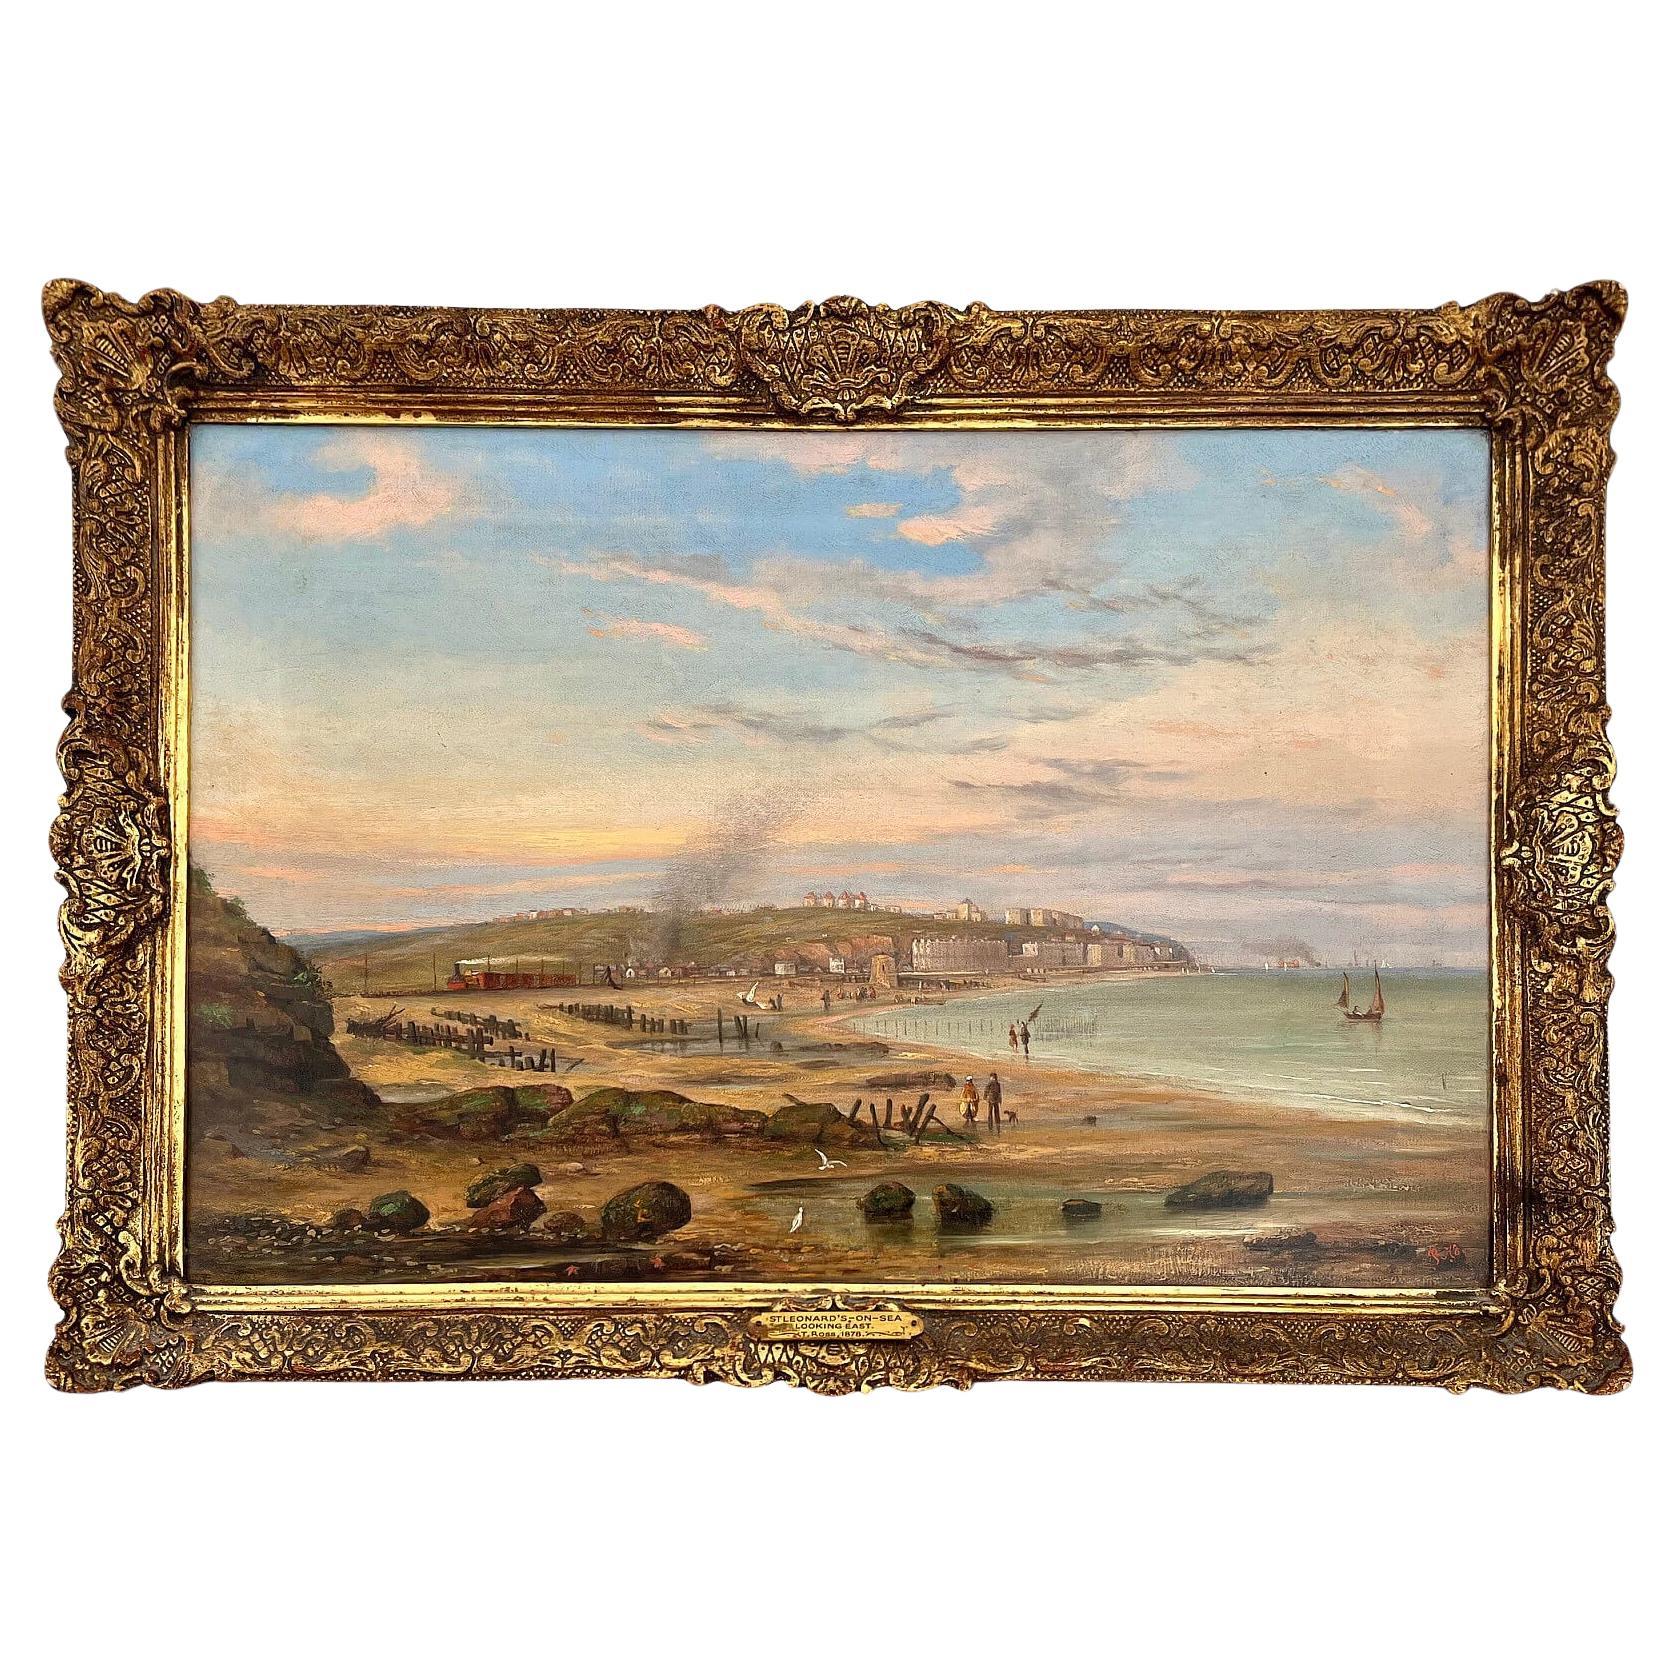 'St. Leonard's-on-Sea Looking East', Oil on Canvas by Thomas Ross, England, 1878